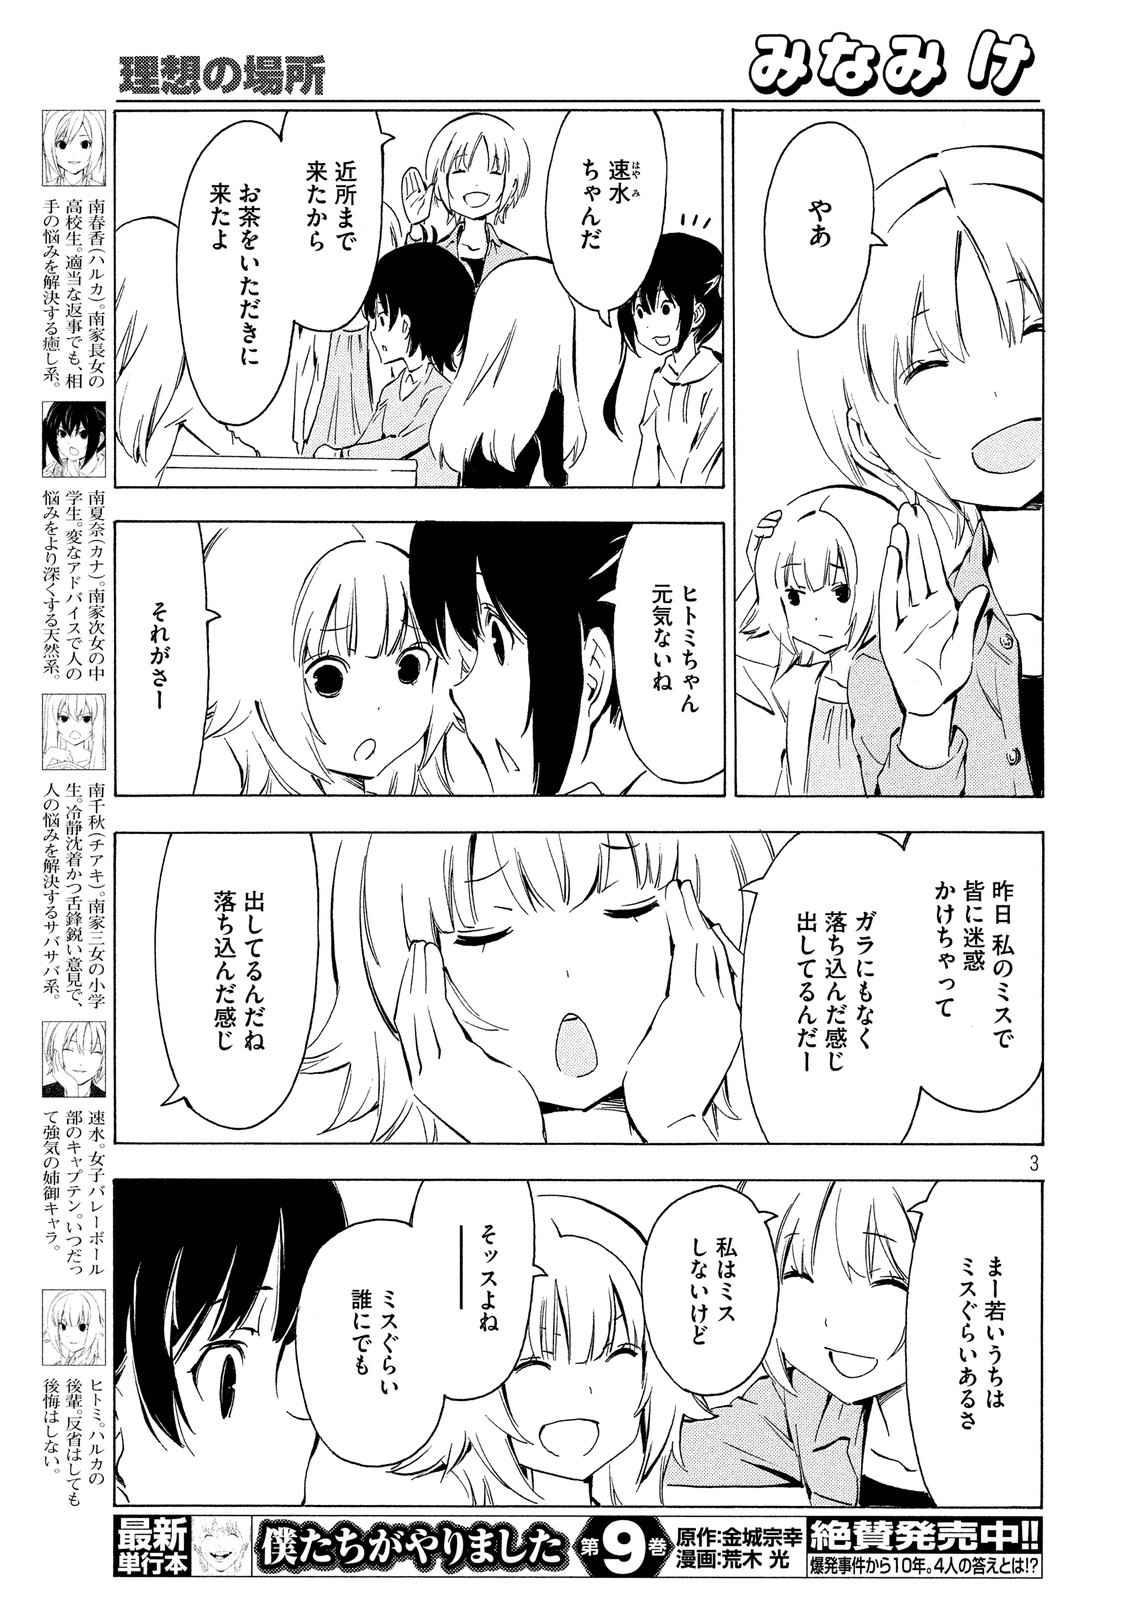 Minami-ke - Chapter 315 - Page 3